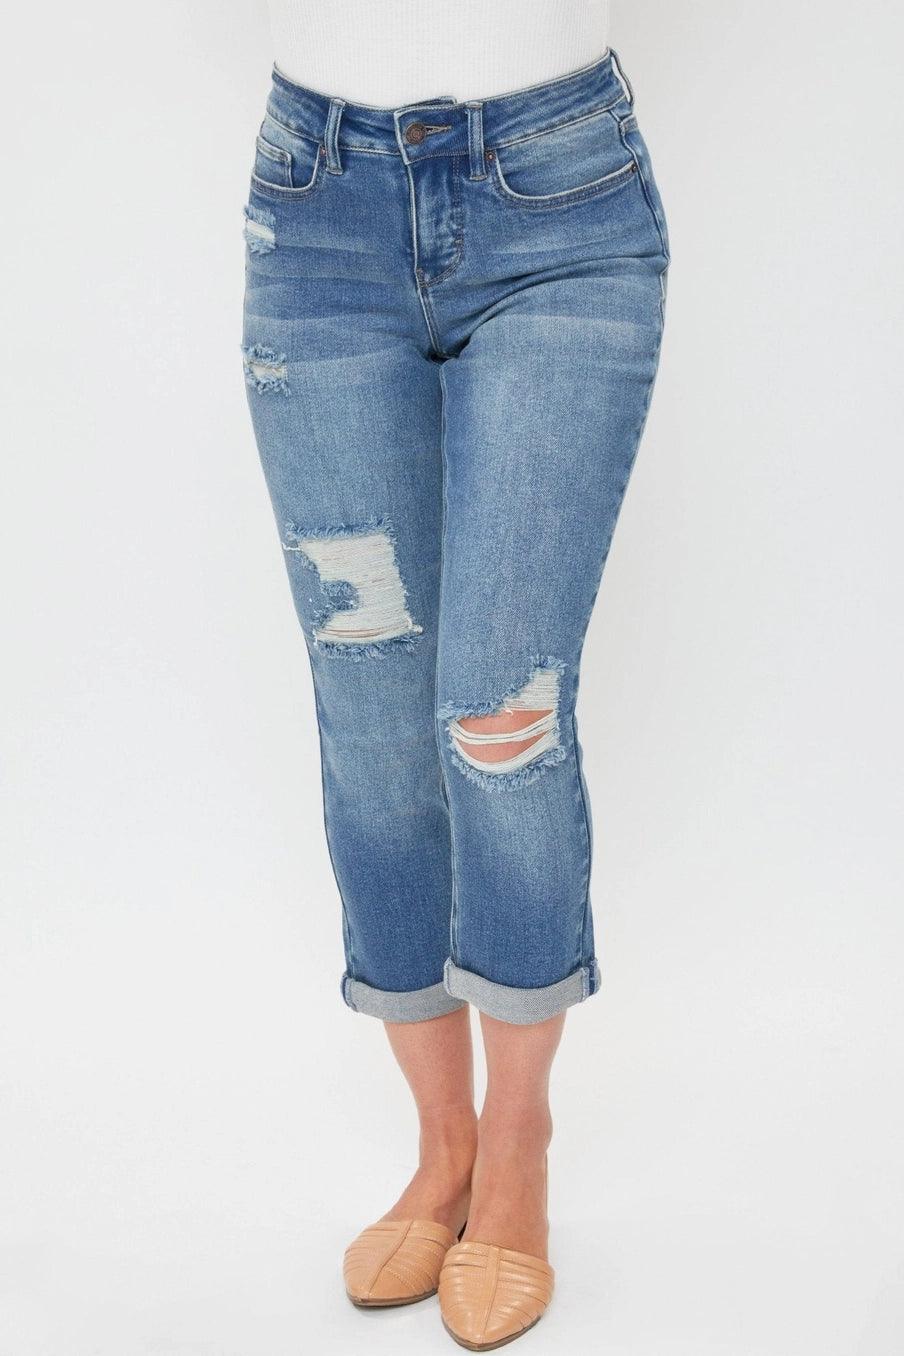 Missy Petite Vintage Slim Straight Jean - The Salty Mare